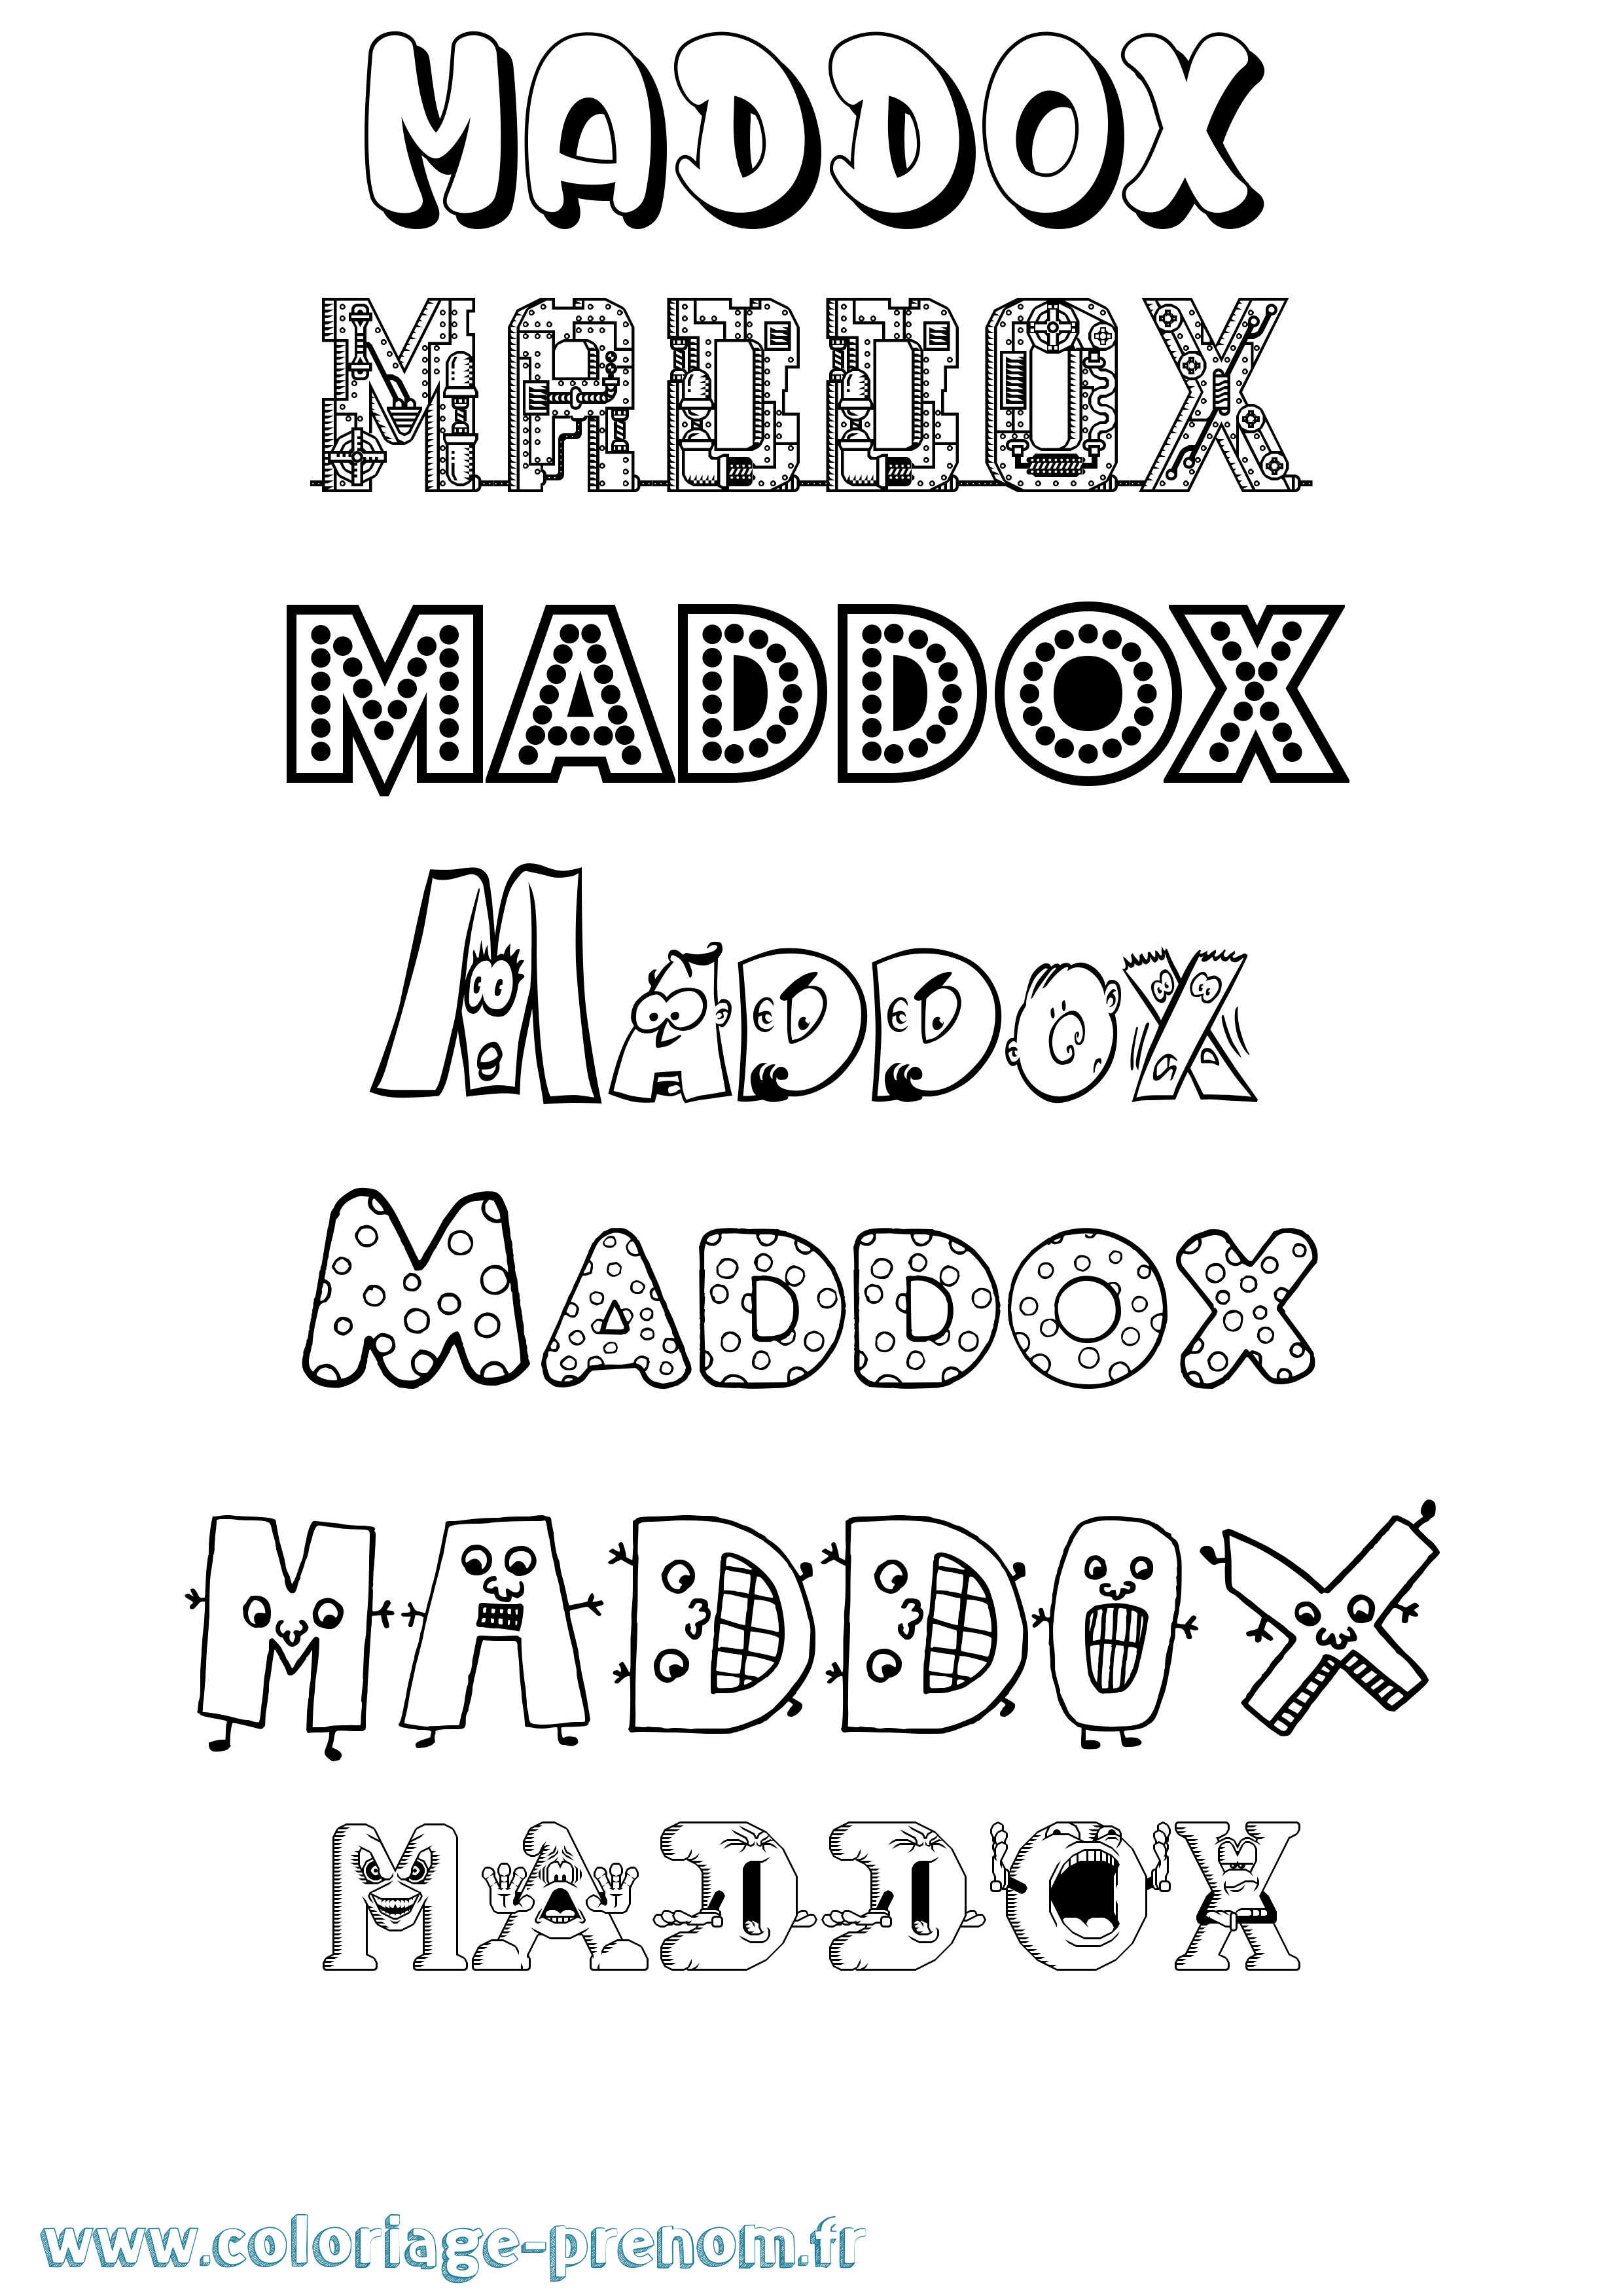 Coloriage prénom Maddox Fun